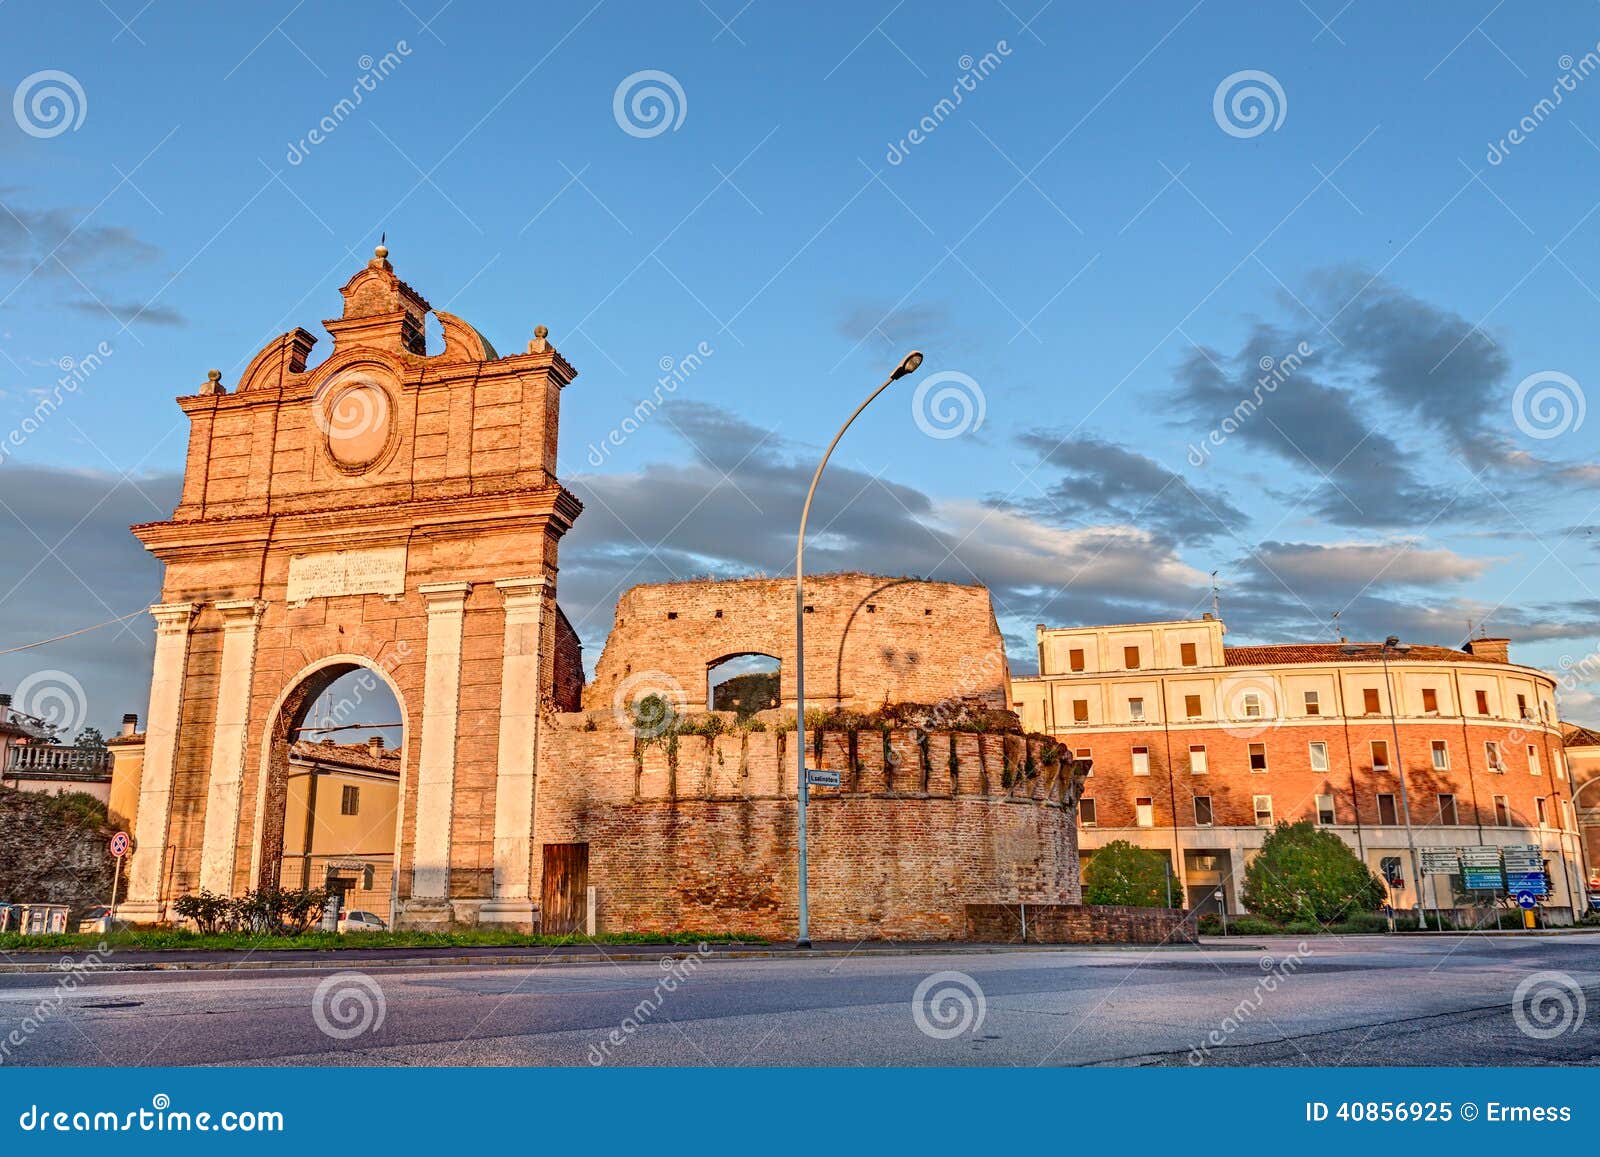 city gate in forli', emilia romagna, italy